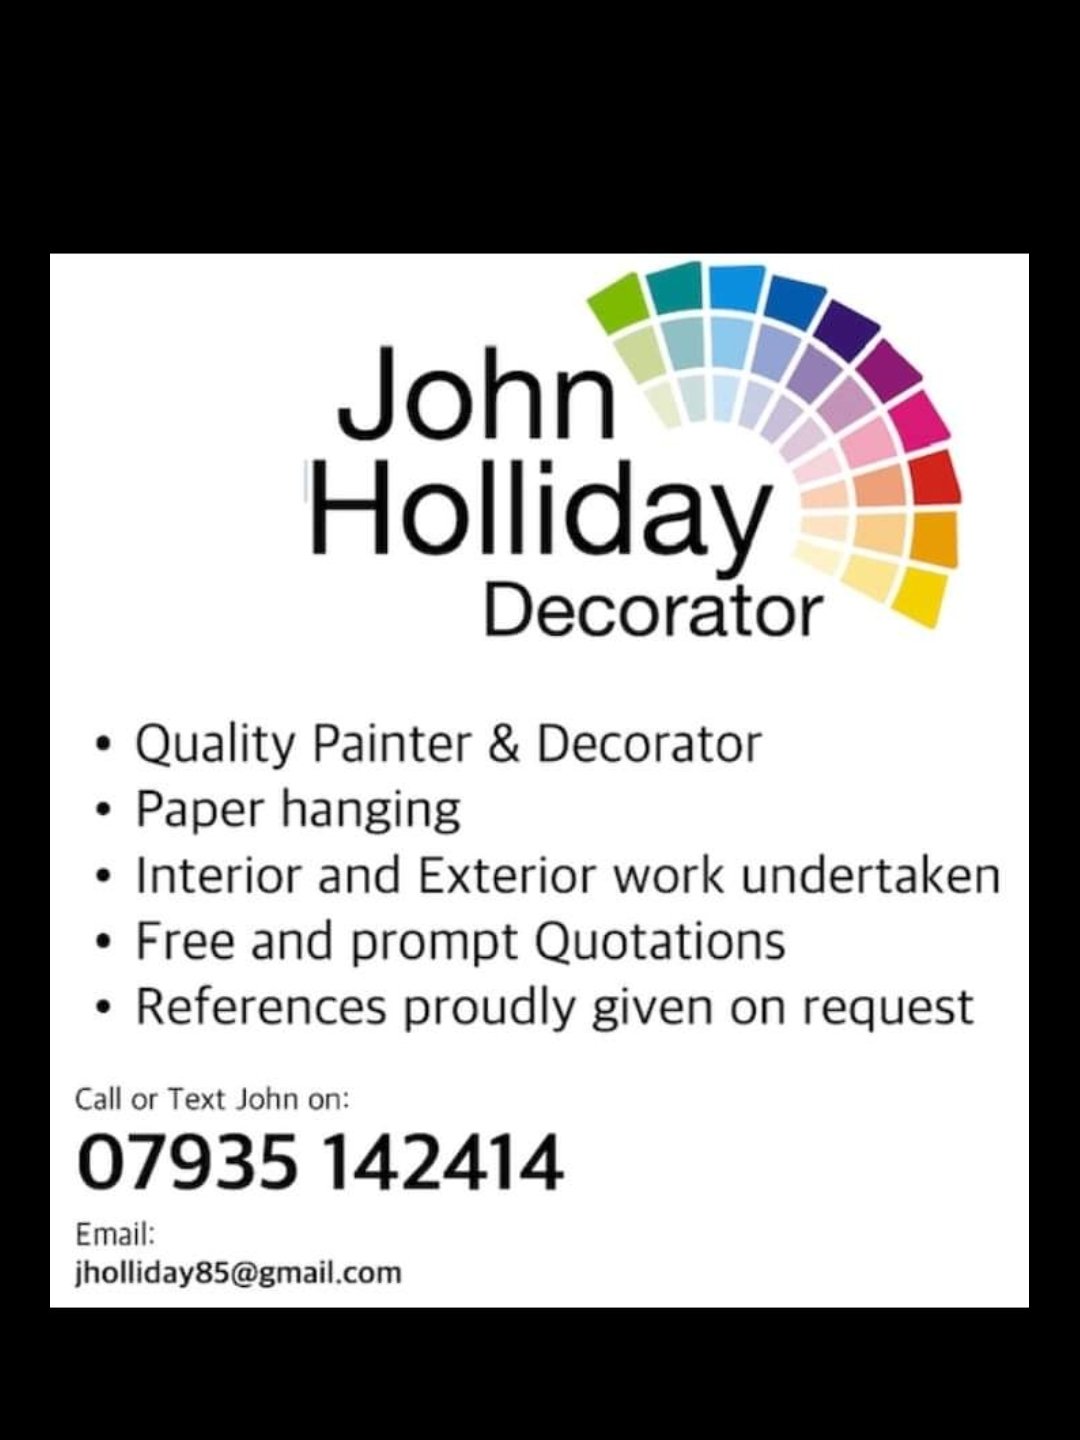 Main header - "John Holliday Decorator"